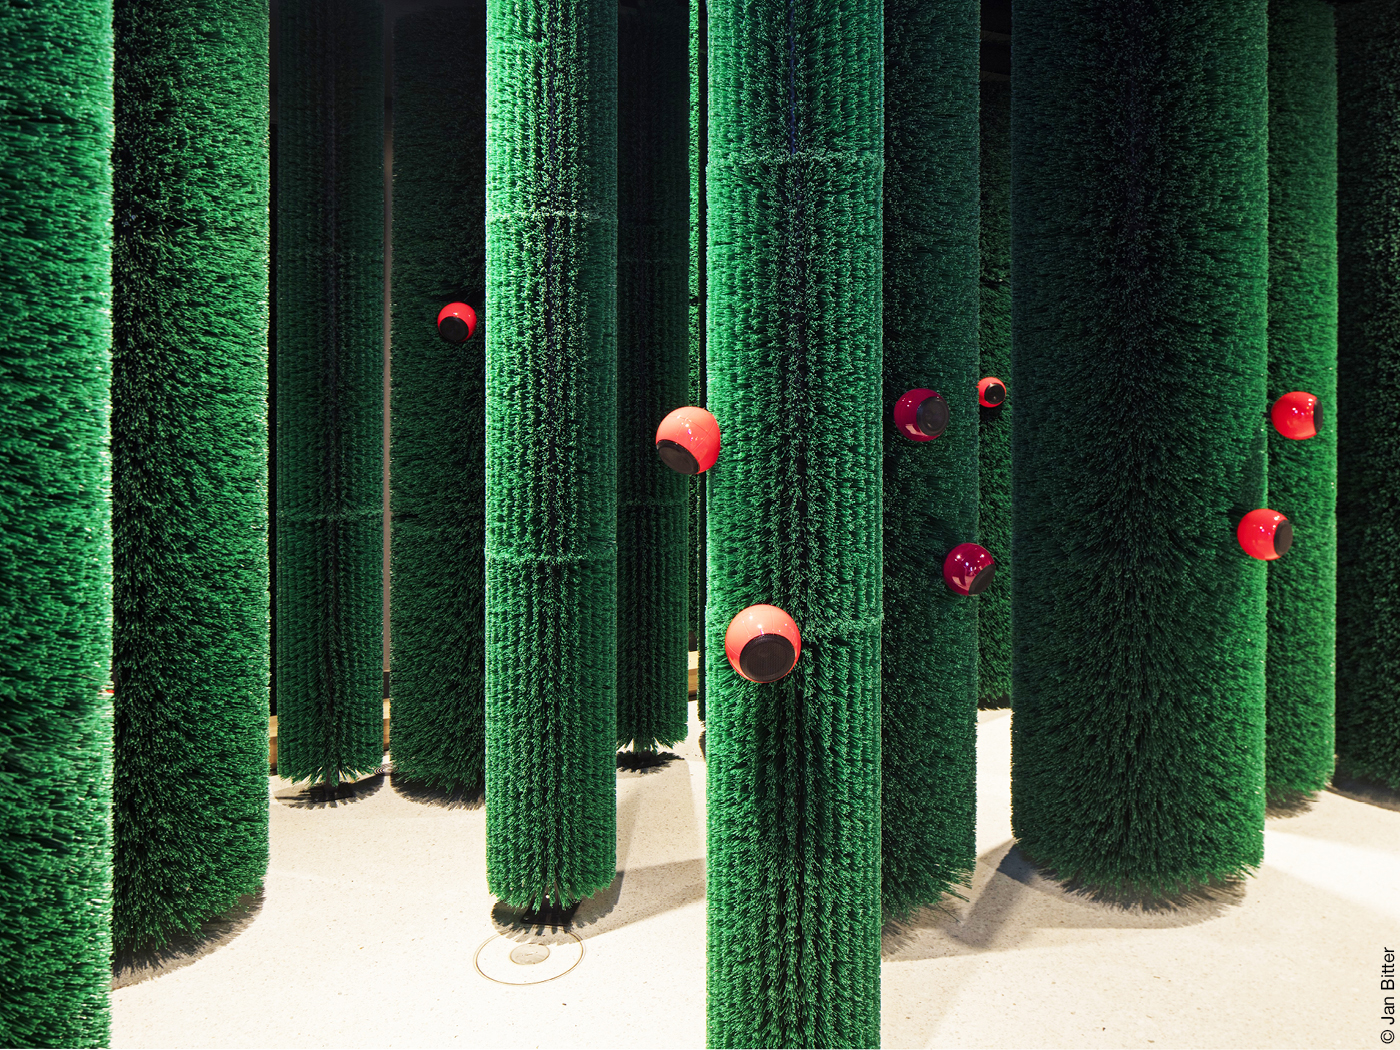 Wald aus grünen Baumstämmen mit roten Lautsprecher-Kugeln